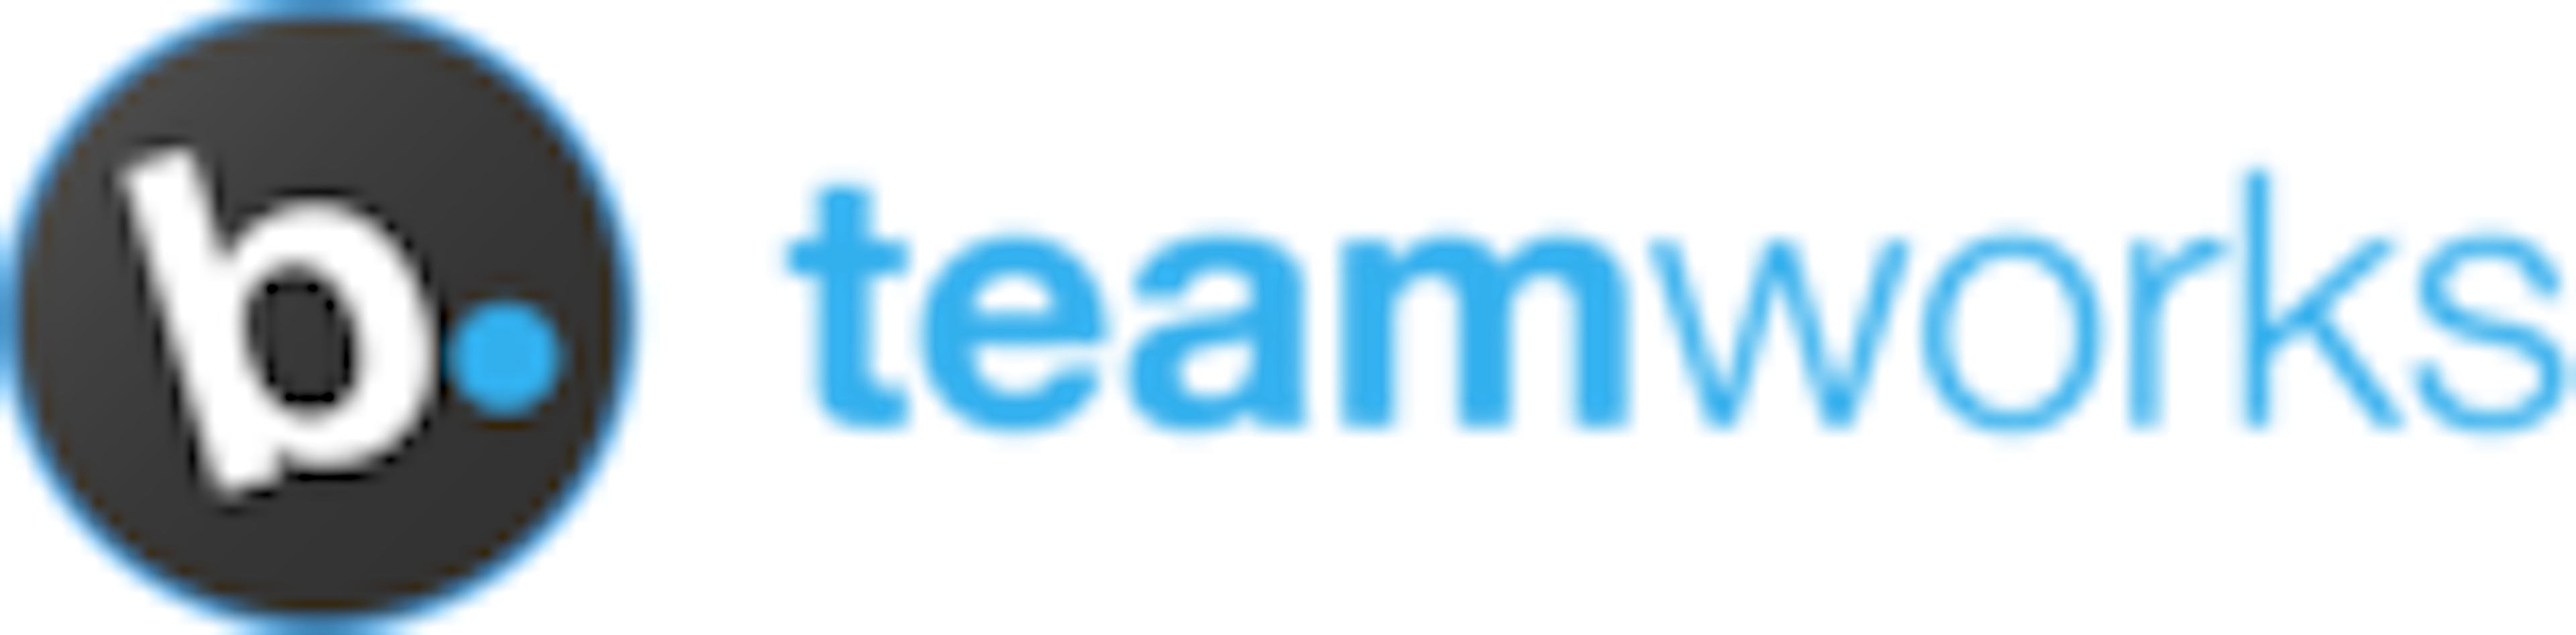 TeamWorks Logo